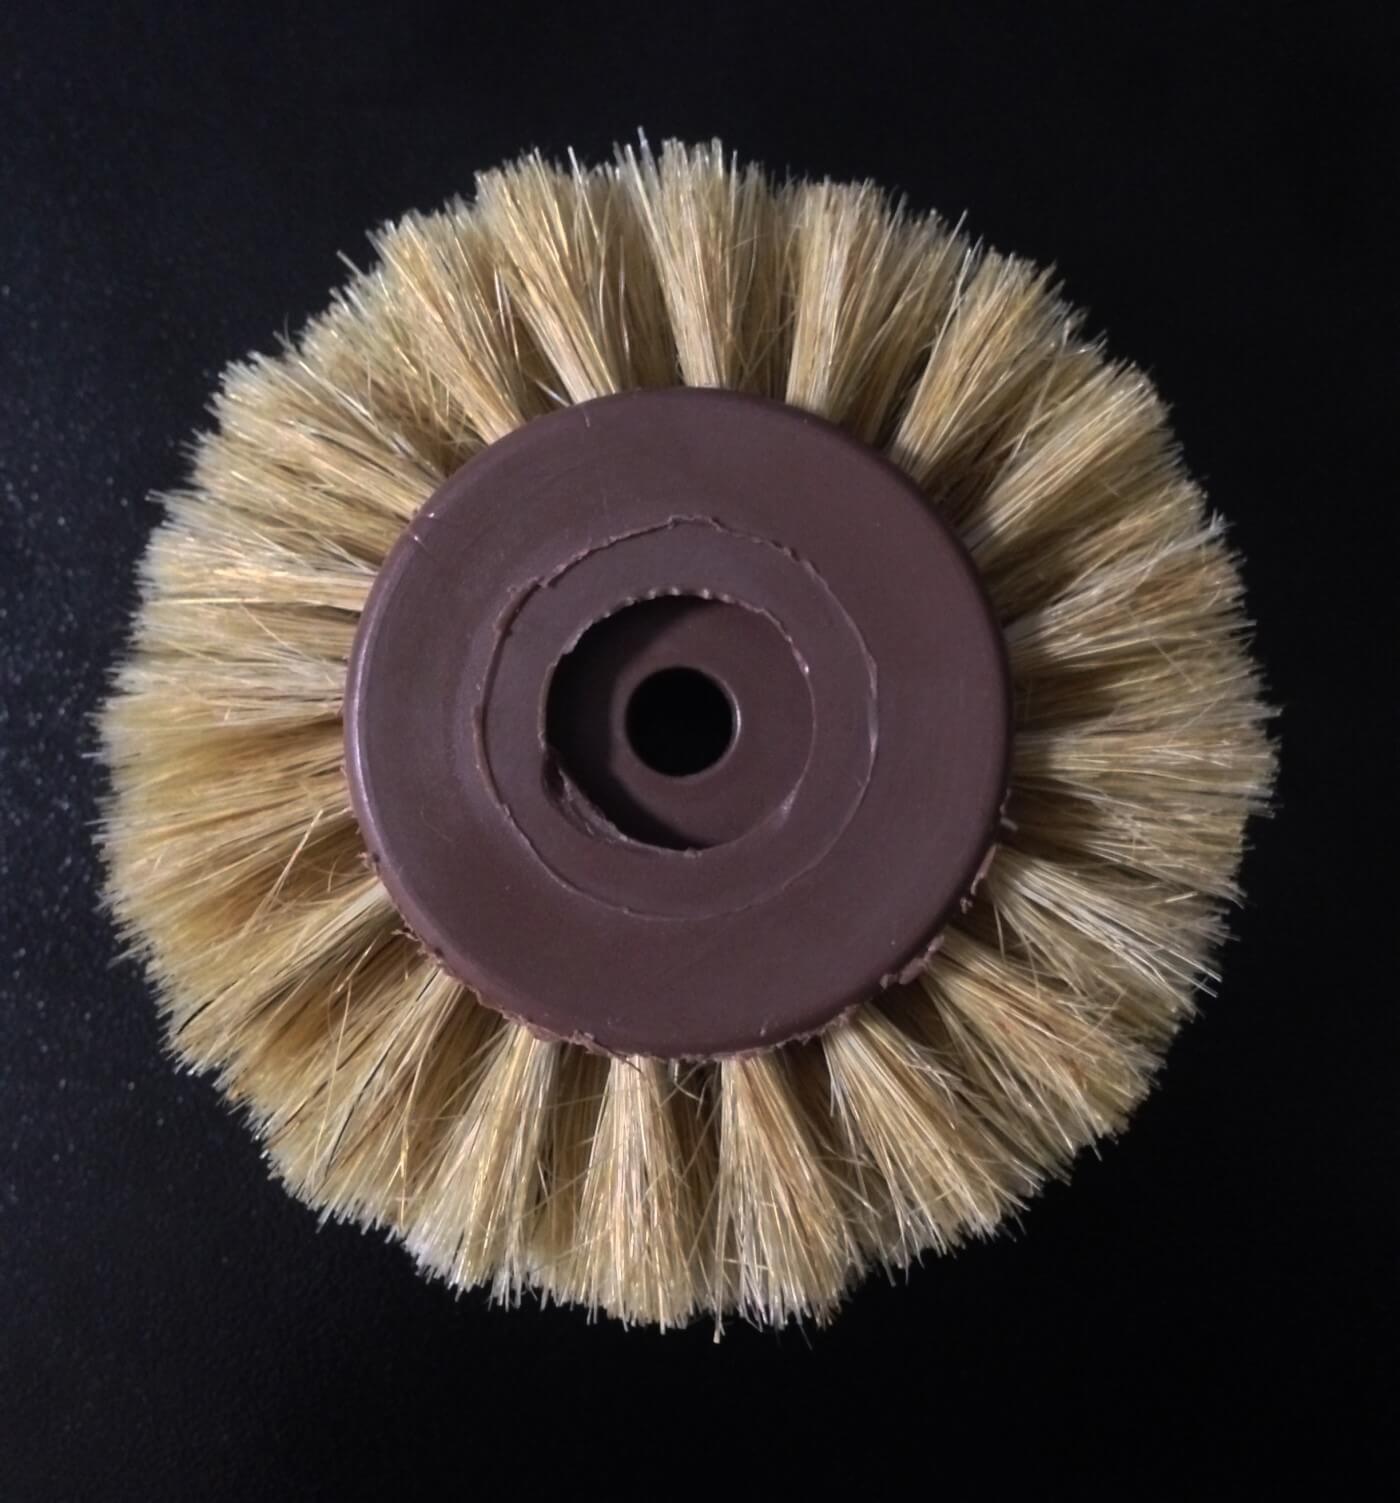 Belgorod brush factory began producing brushes with 1MM bristles